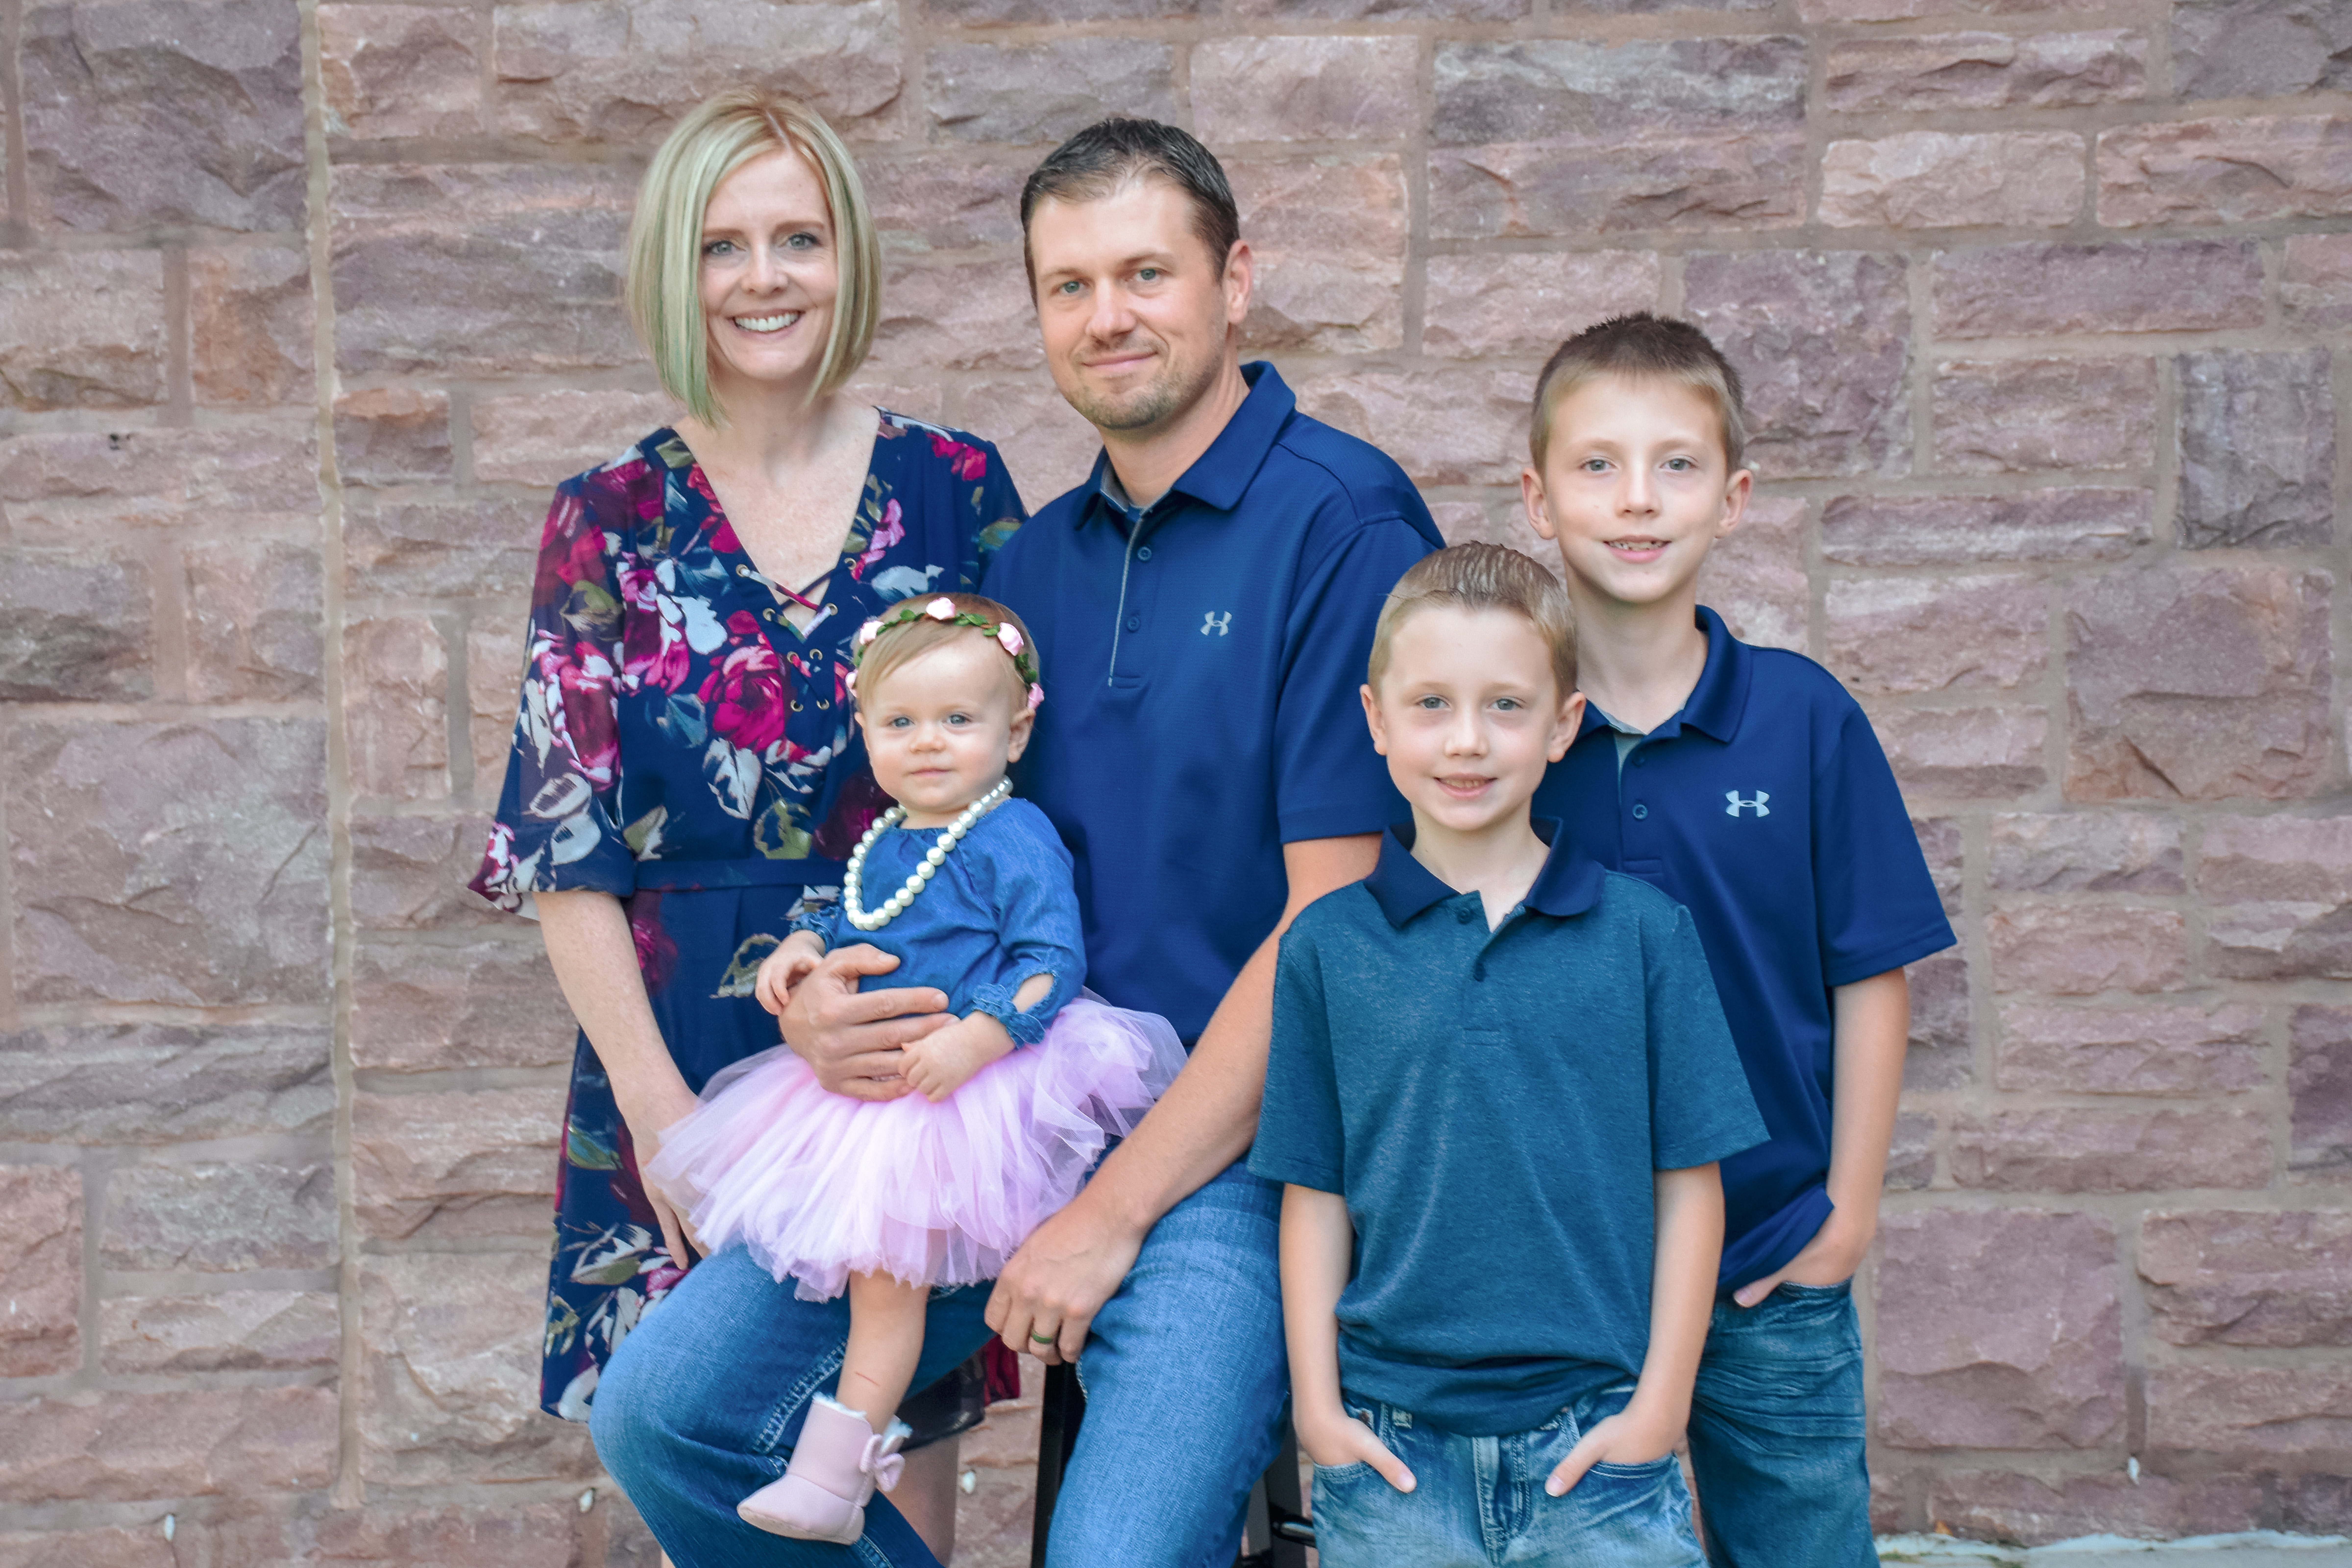 Grenier family: "Mitchell chose us"